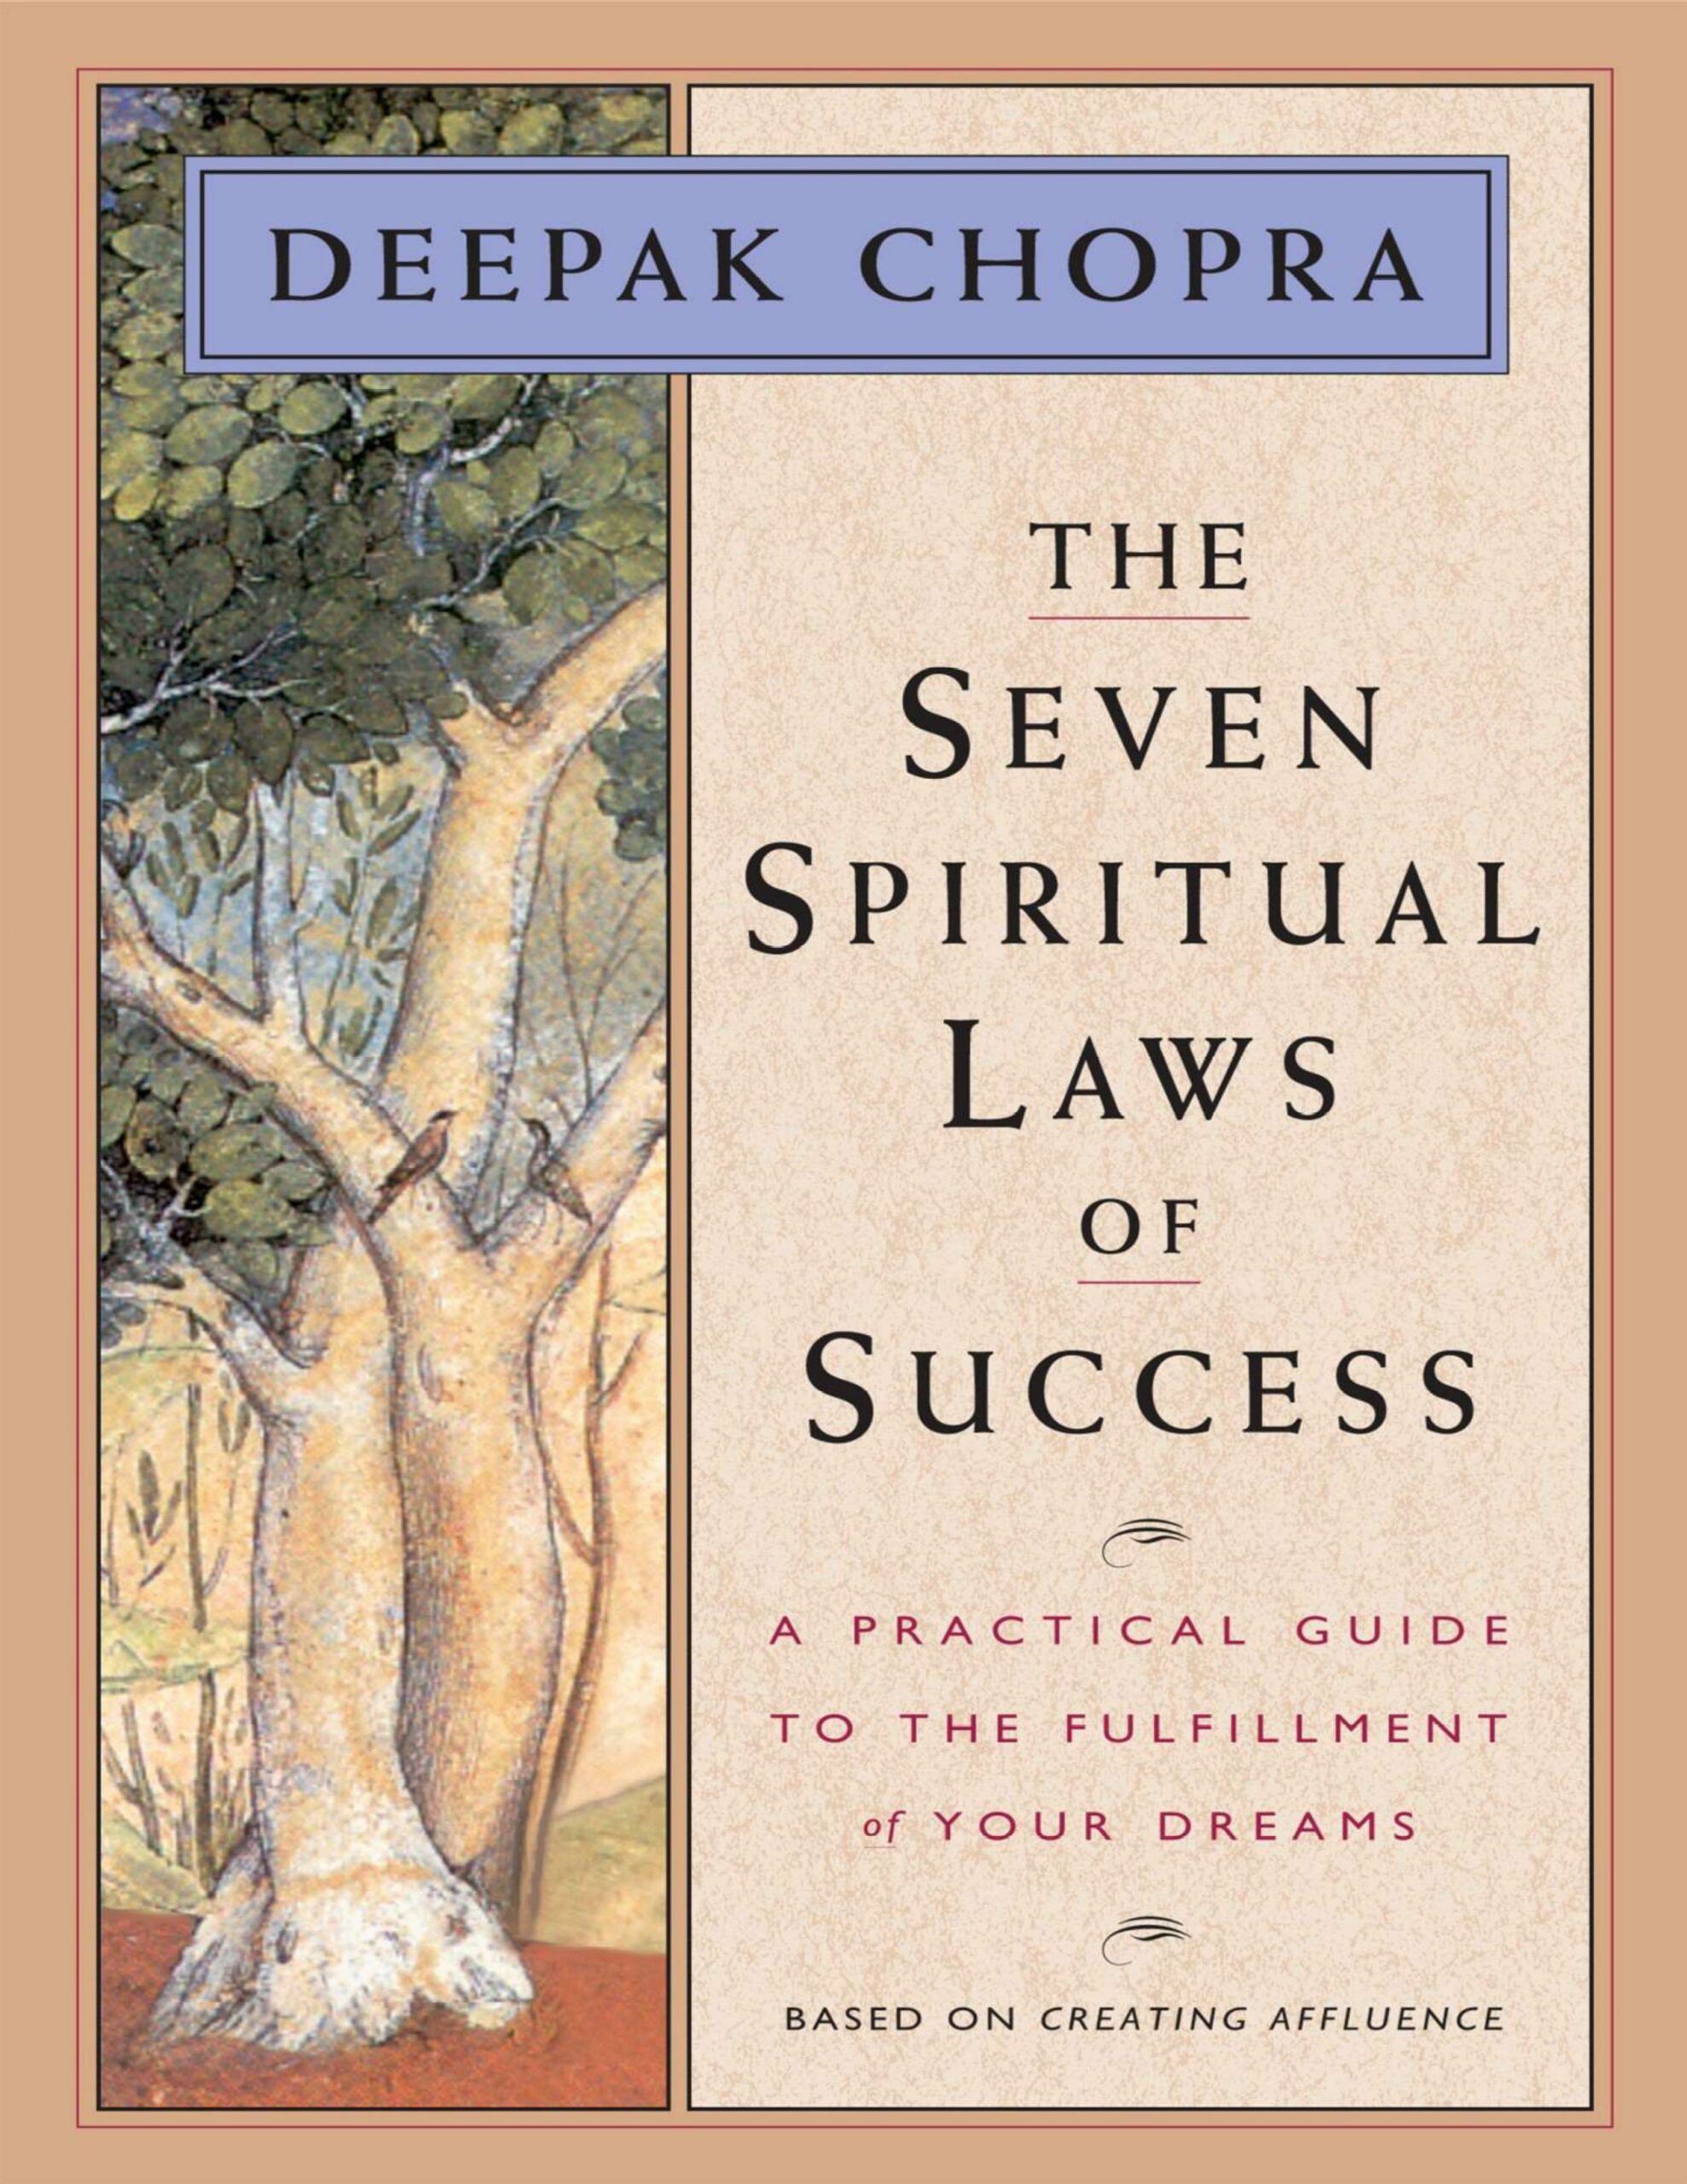 The seven spiritual laws of success book cover photo